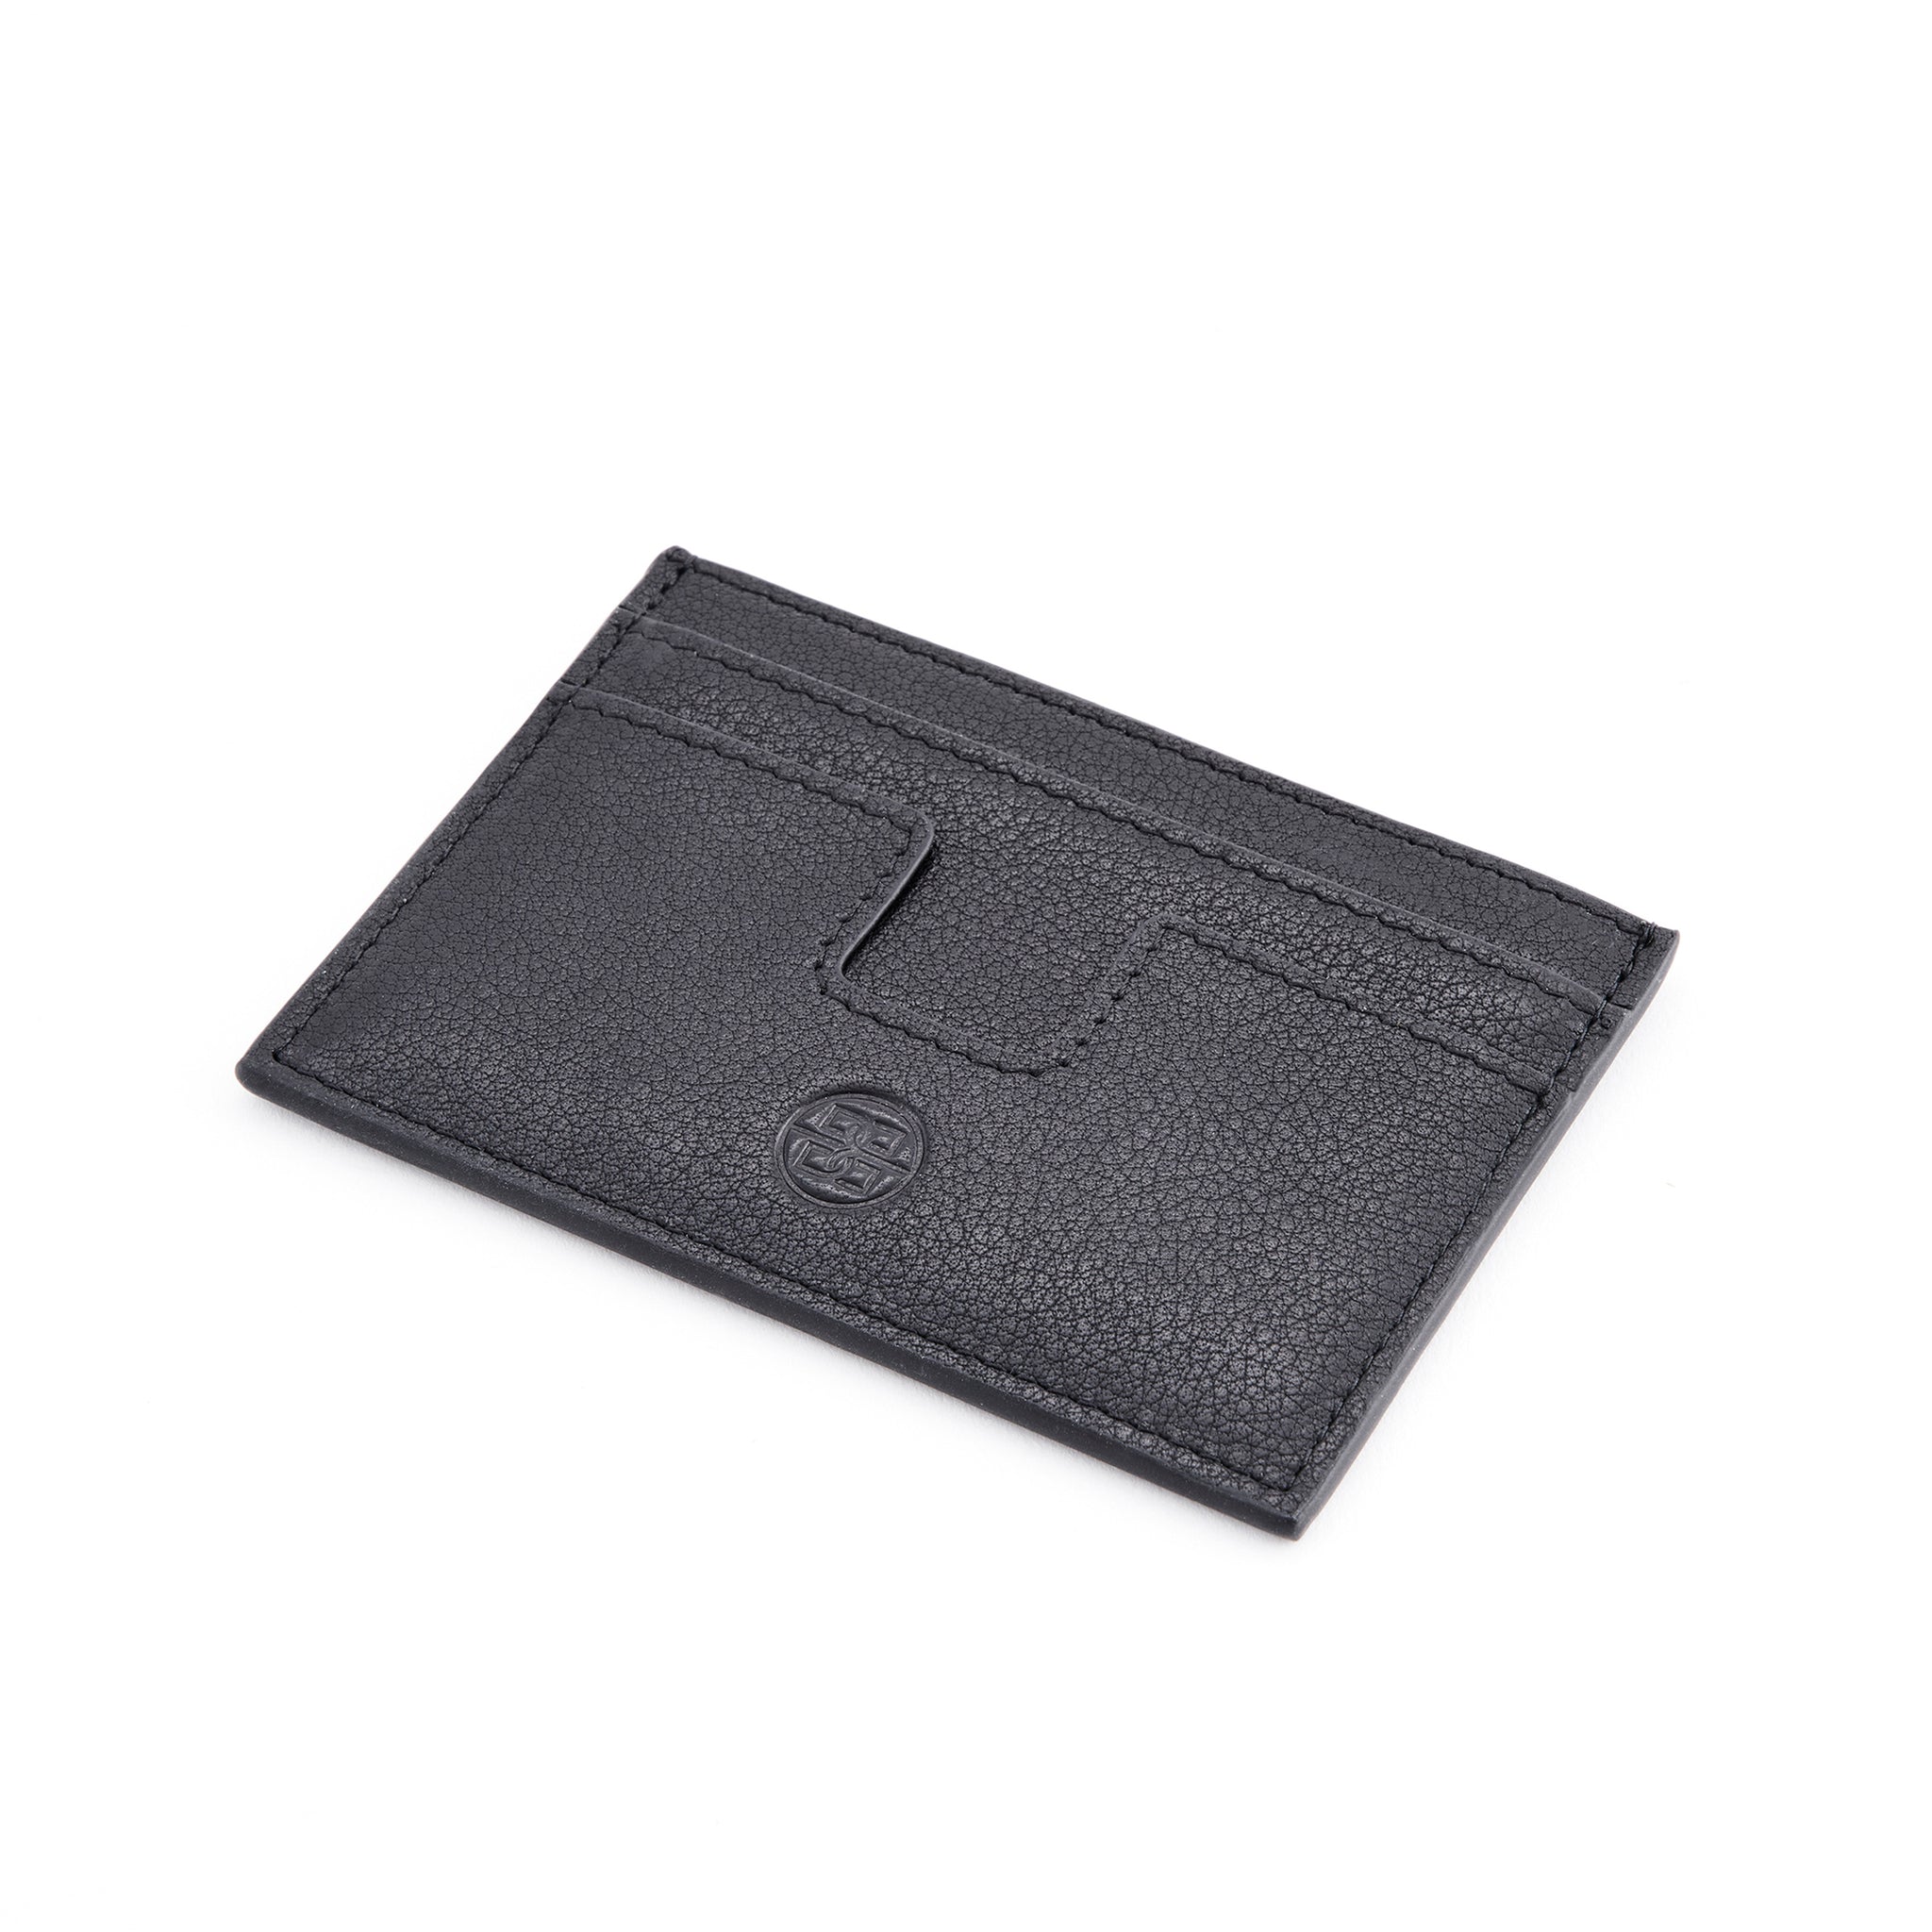 Albert - Leather Cardholder in Black